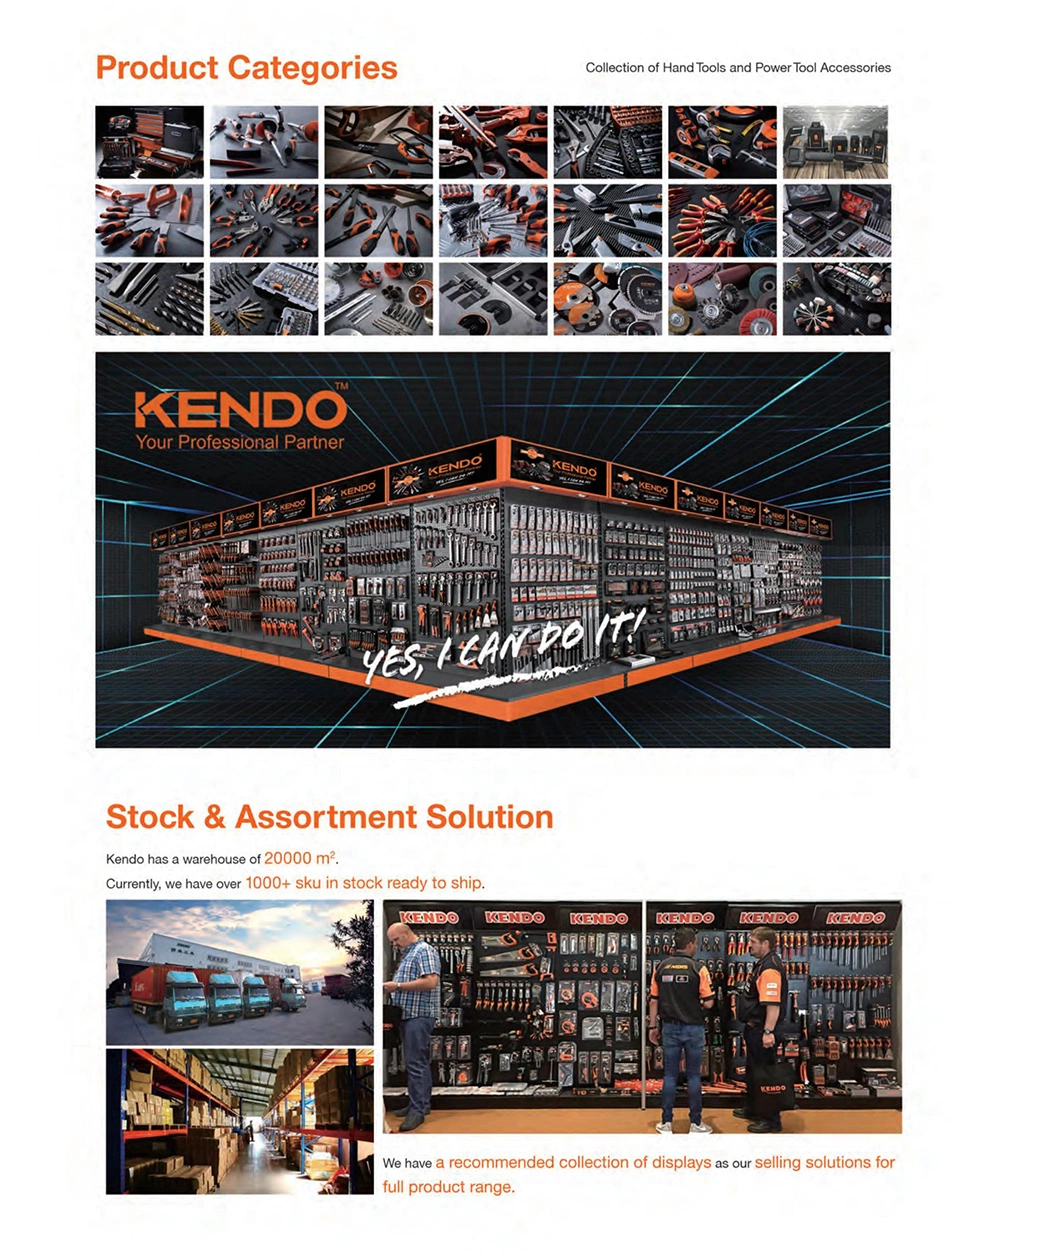 Kendo High Performance Hardened Cutting Edges Cr-Mo Aviation Tin Snips - Straight Cut